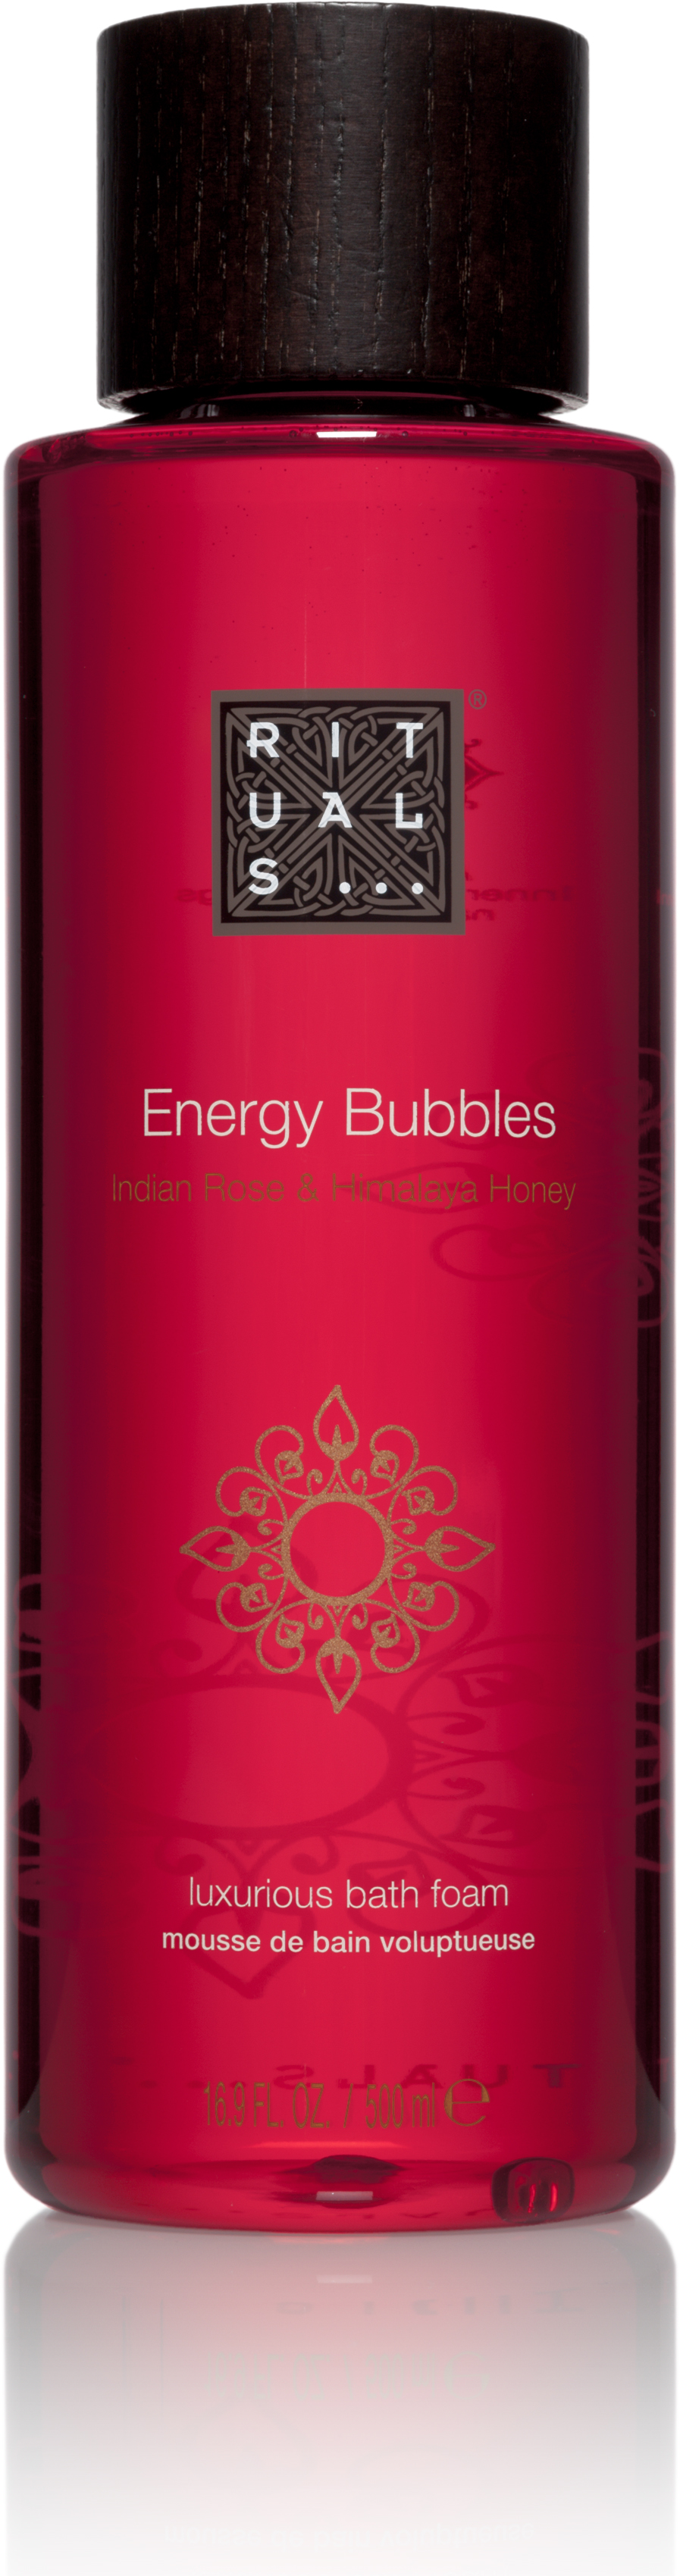 Rituals Ayurveda Energy Bubbles